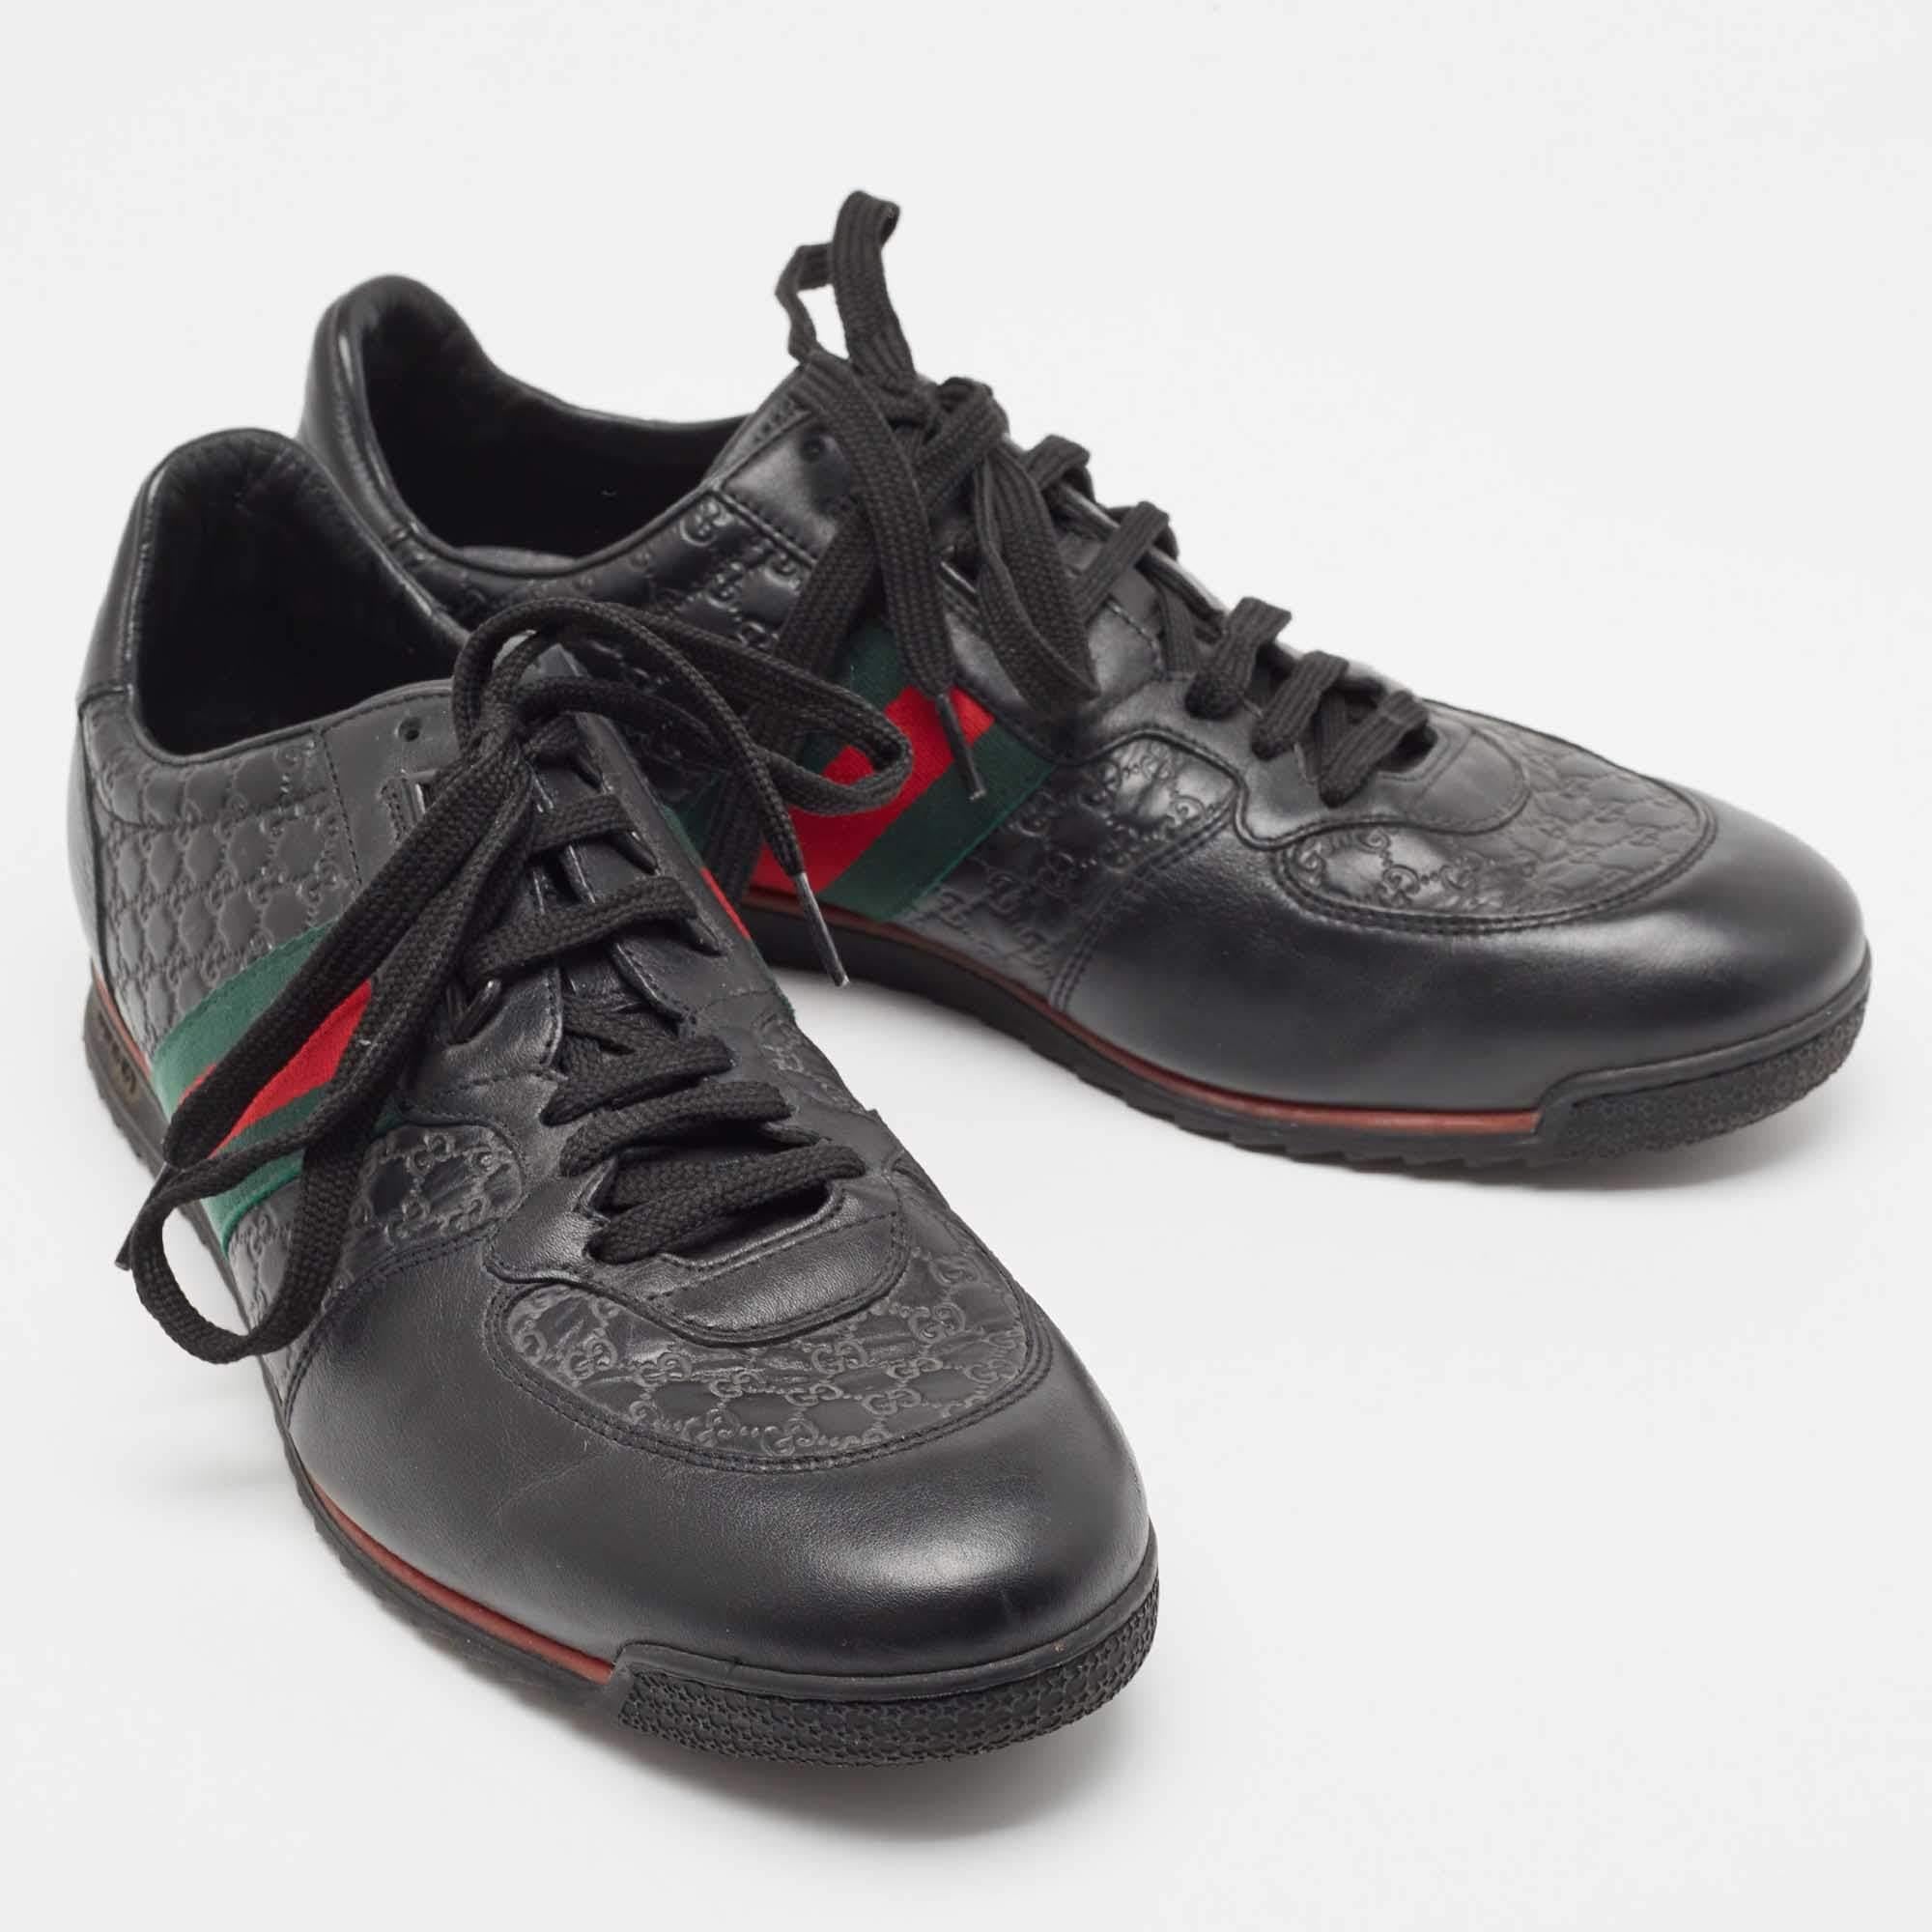 Gucci Black Leather Web Low Top Sneakers Size 44 In Good Condition For Sale In Dubai, Al Qouz 2